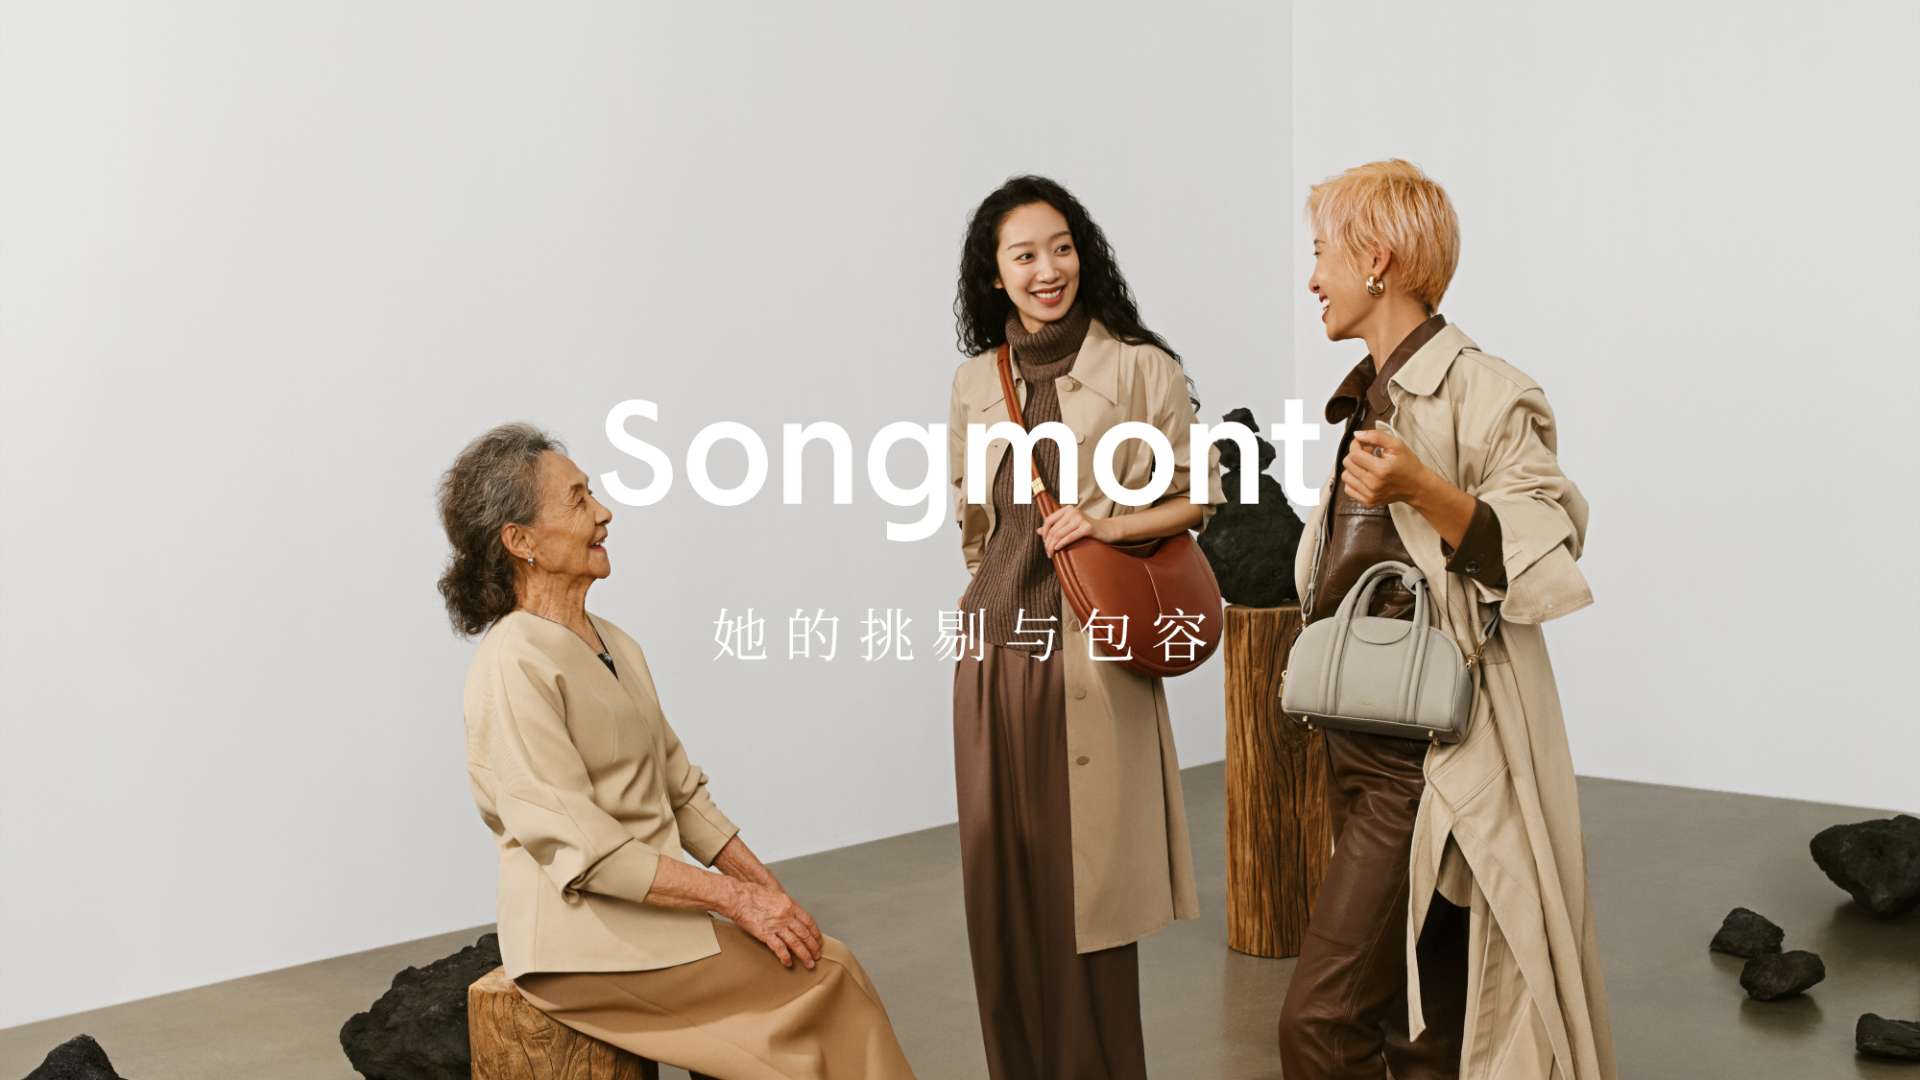 Songmont 品牌挚友广告大片 | 她的挑剔与包容